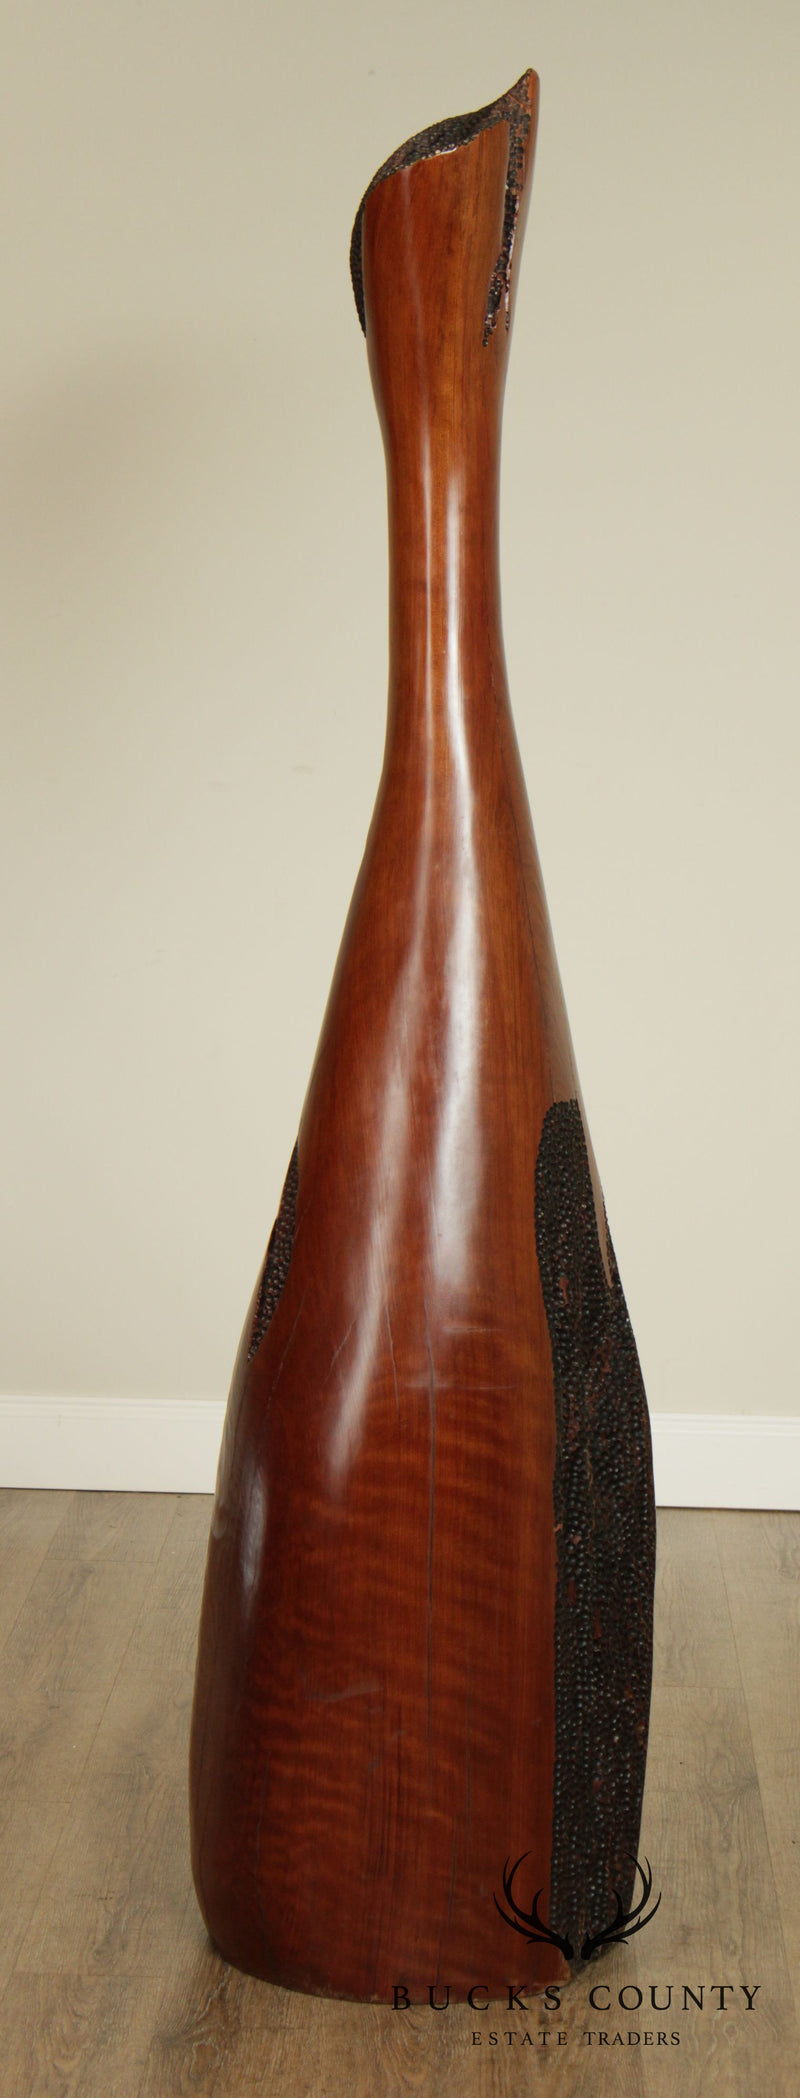 Monumental Abstract Polished Walnut Sculpture, Tall Slender Vase Form